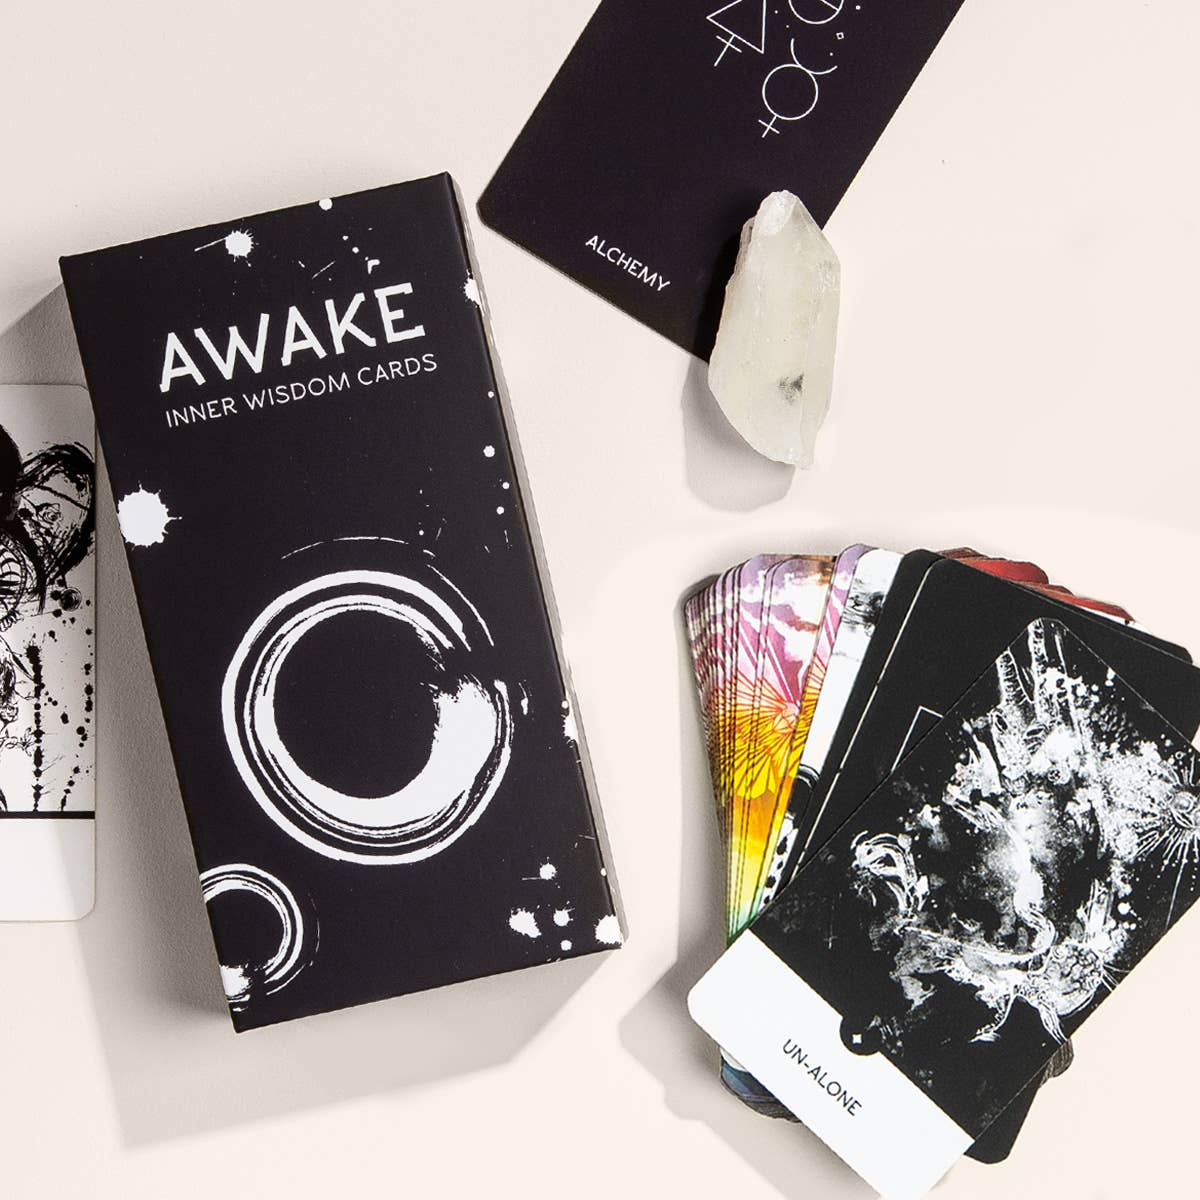 AWAKE: Inner Wisdom Cards